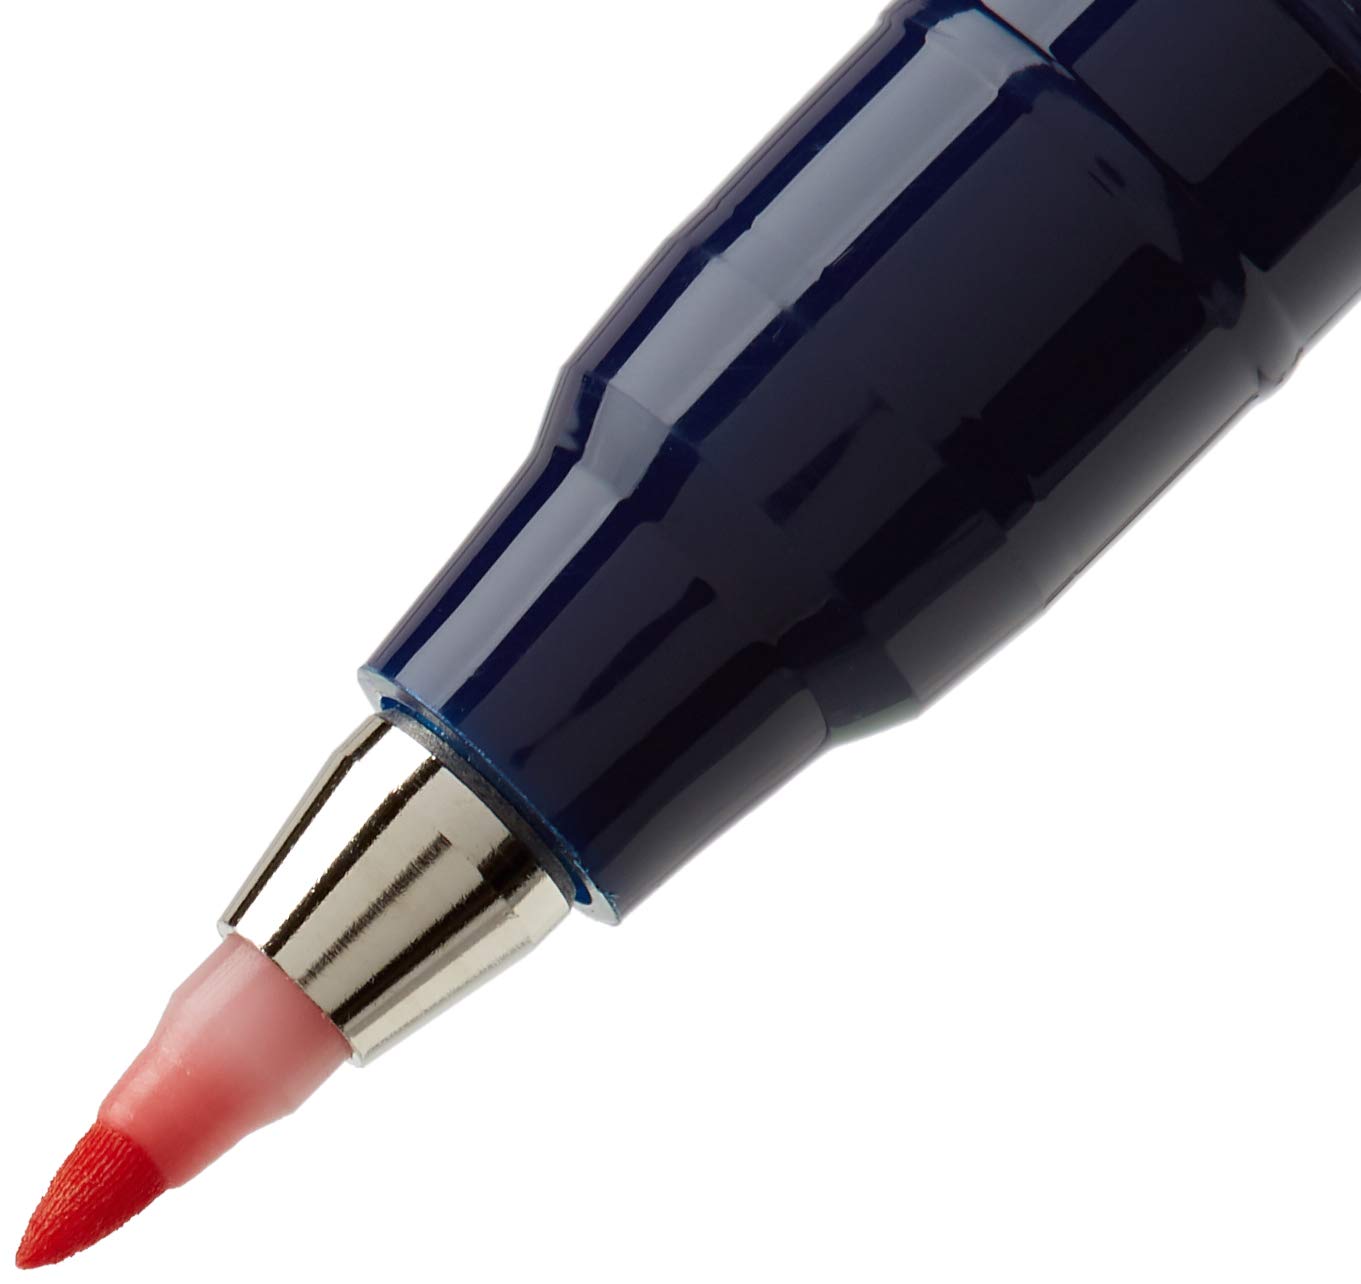 Tombow WS-BH-10P Fudenosuke Colour Brush Pens (Pack of 10)